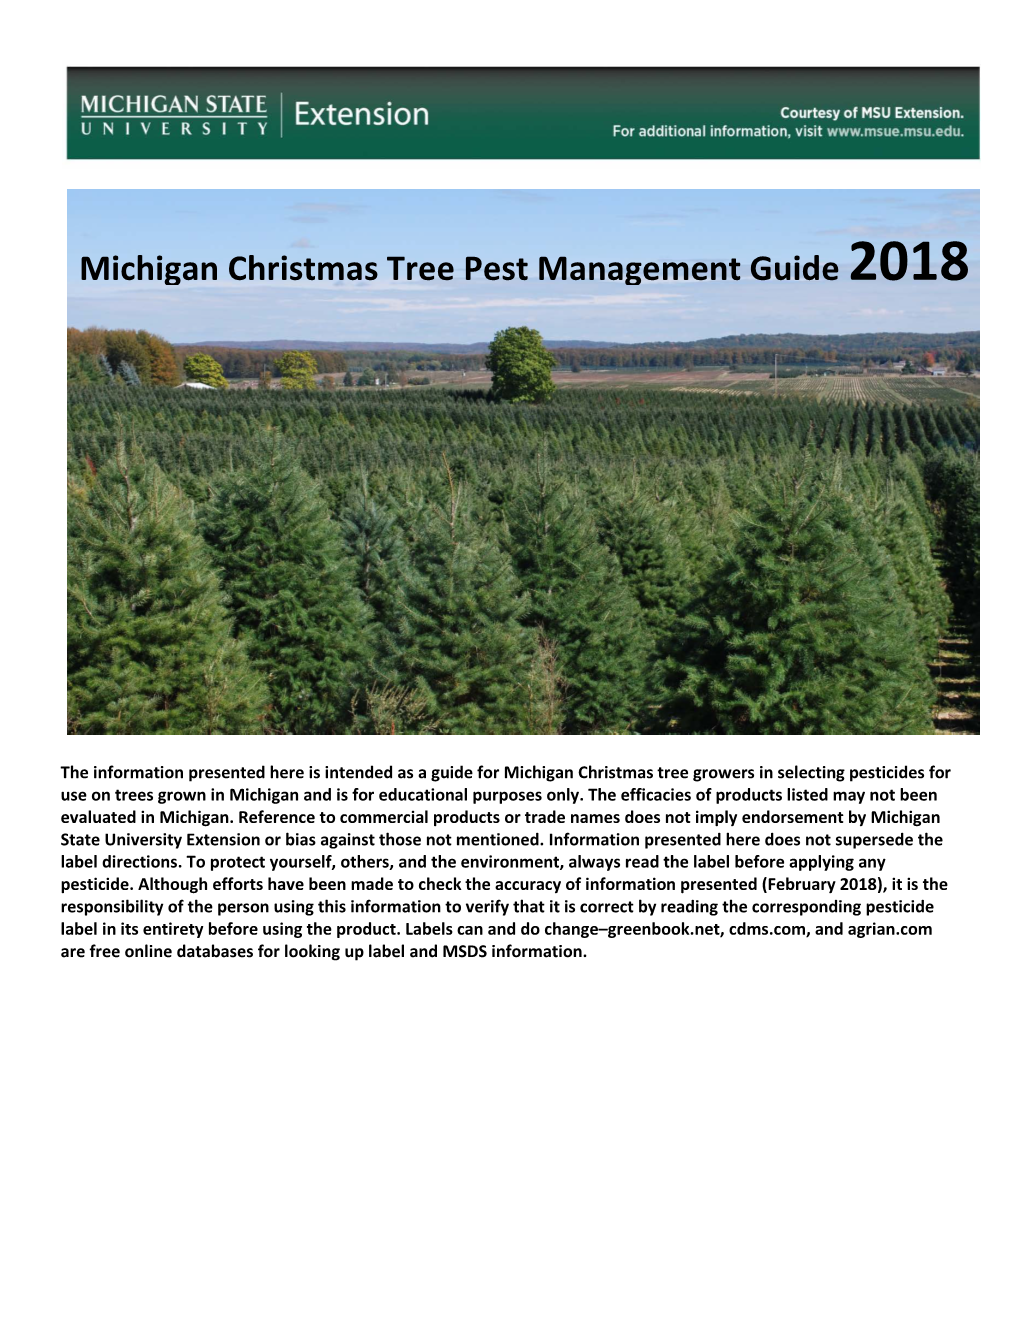 Michigan Christmas Tree Pest Management Guide 2018